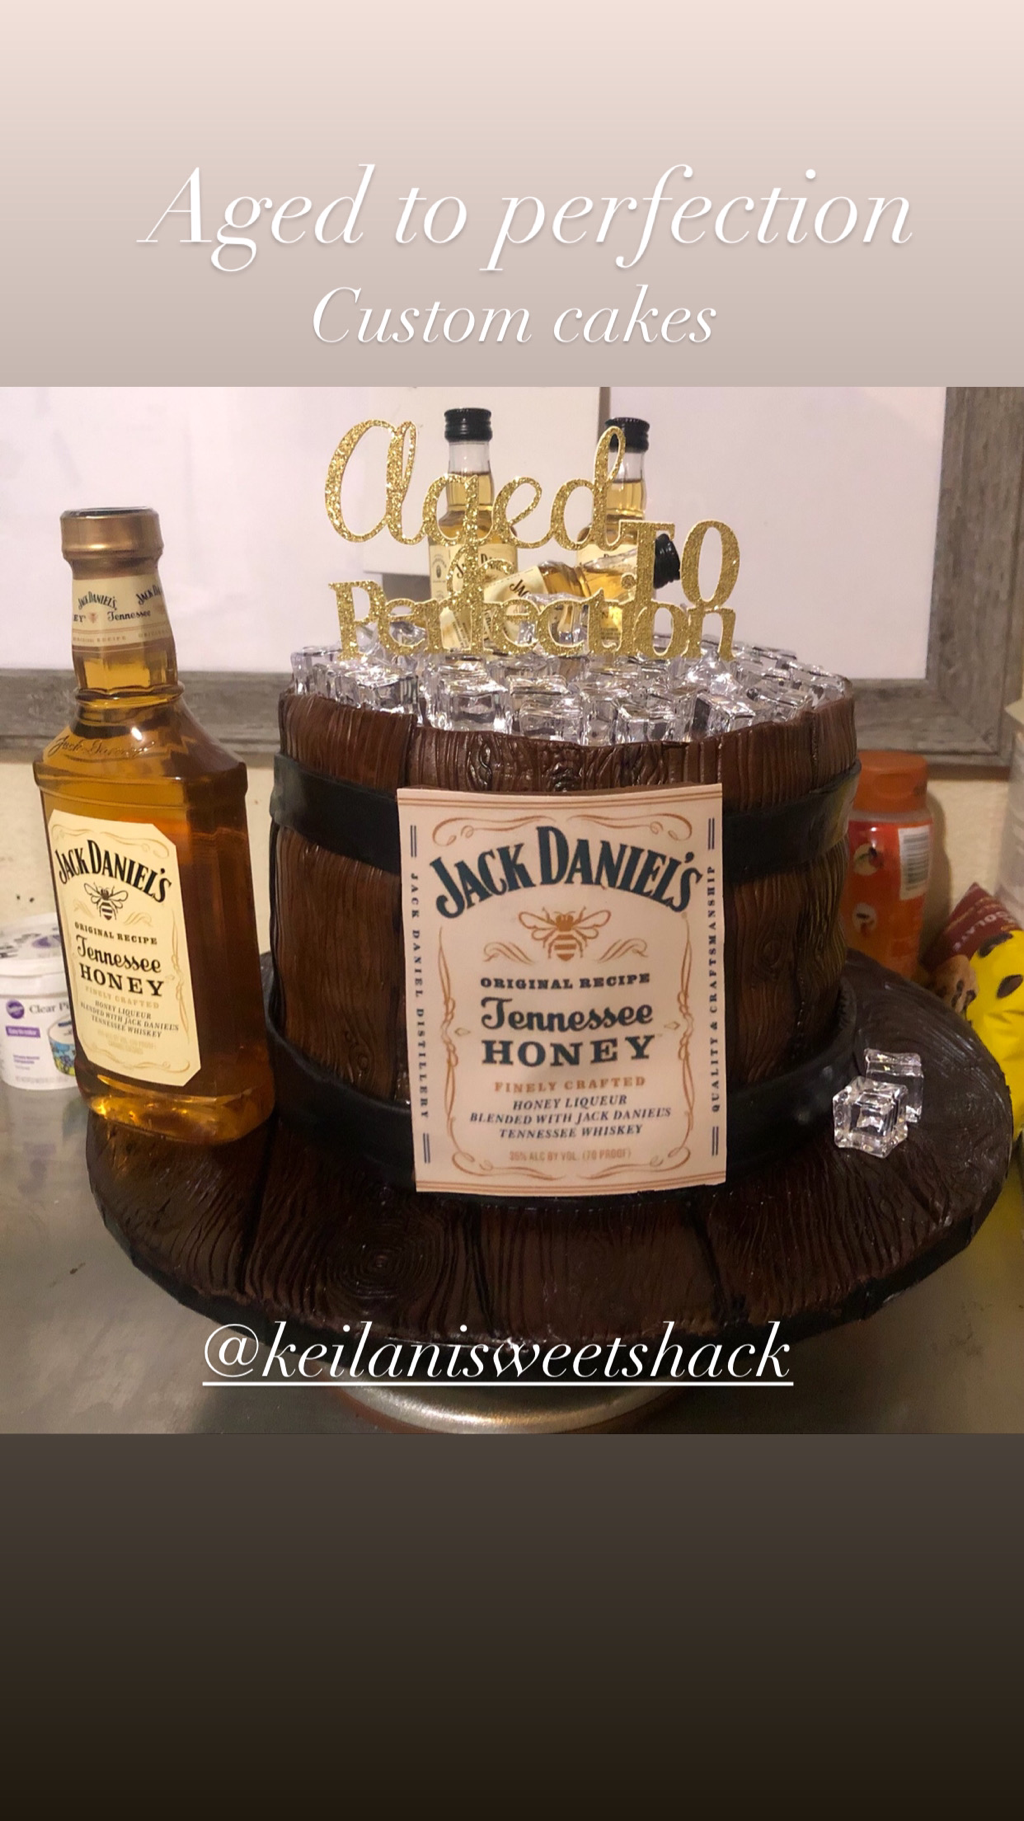 Jack Daniel’s Tennessee Honey birthday cake